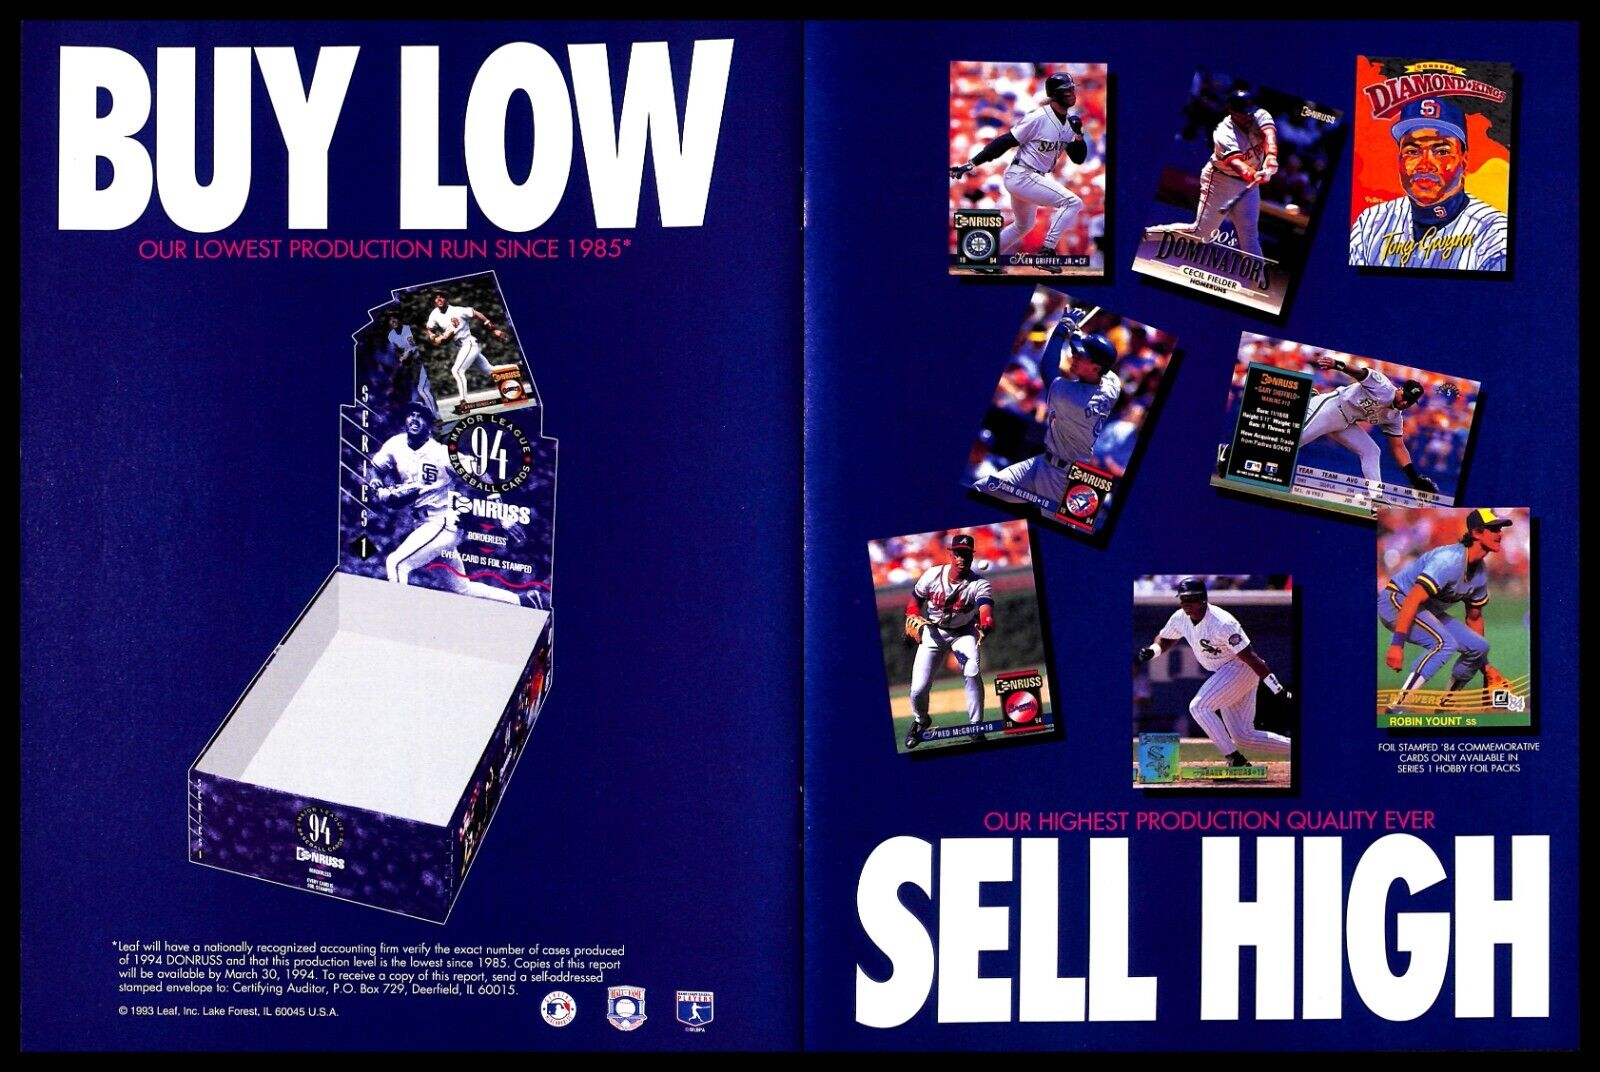 1994 Donruss Baseball Cards Retro PRINT ADVERTISEMENT Sports Collectible Promo